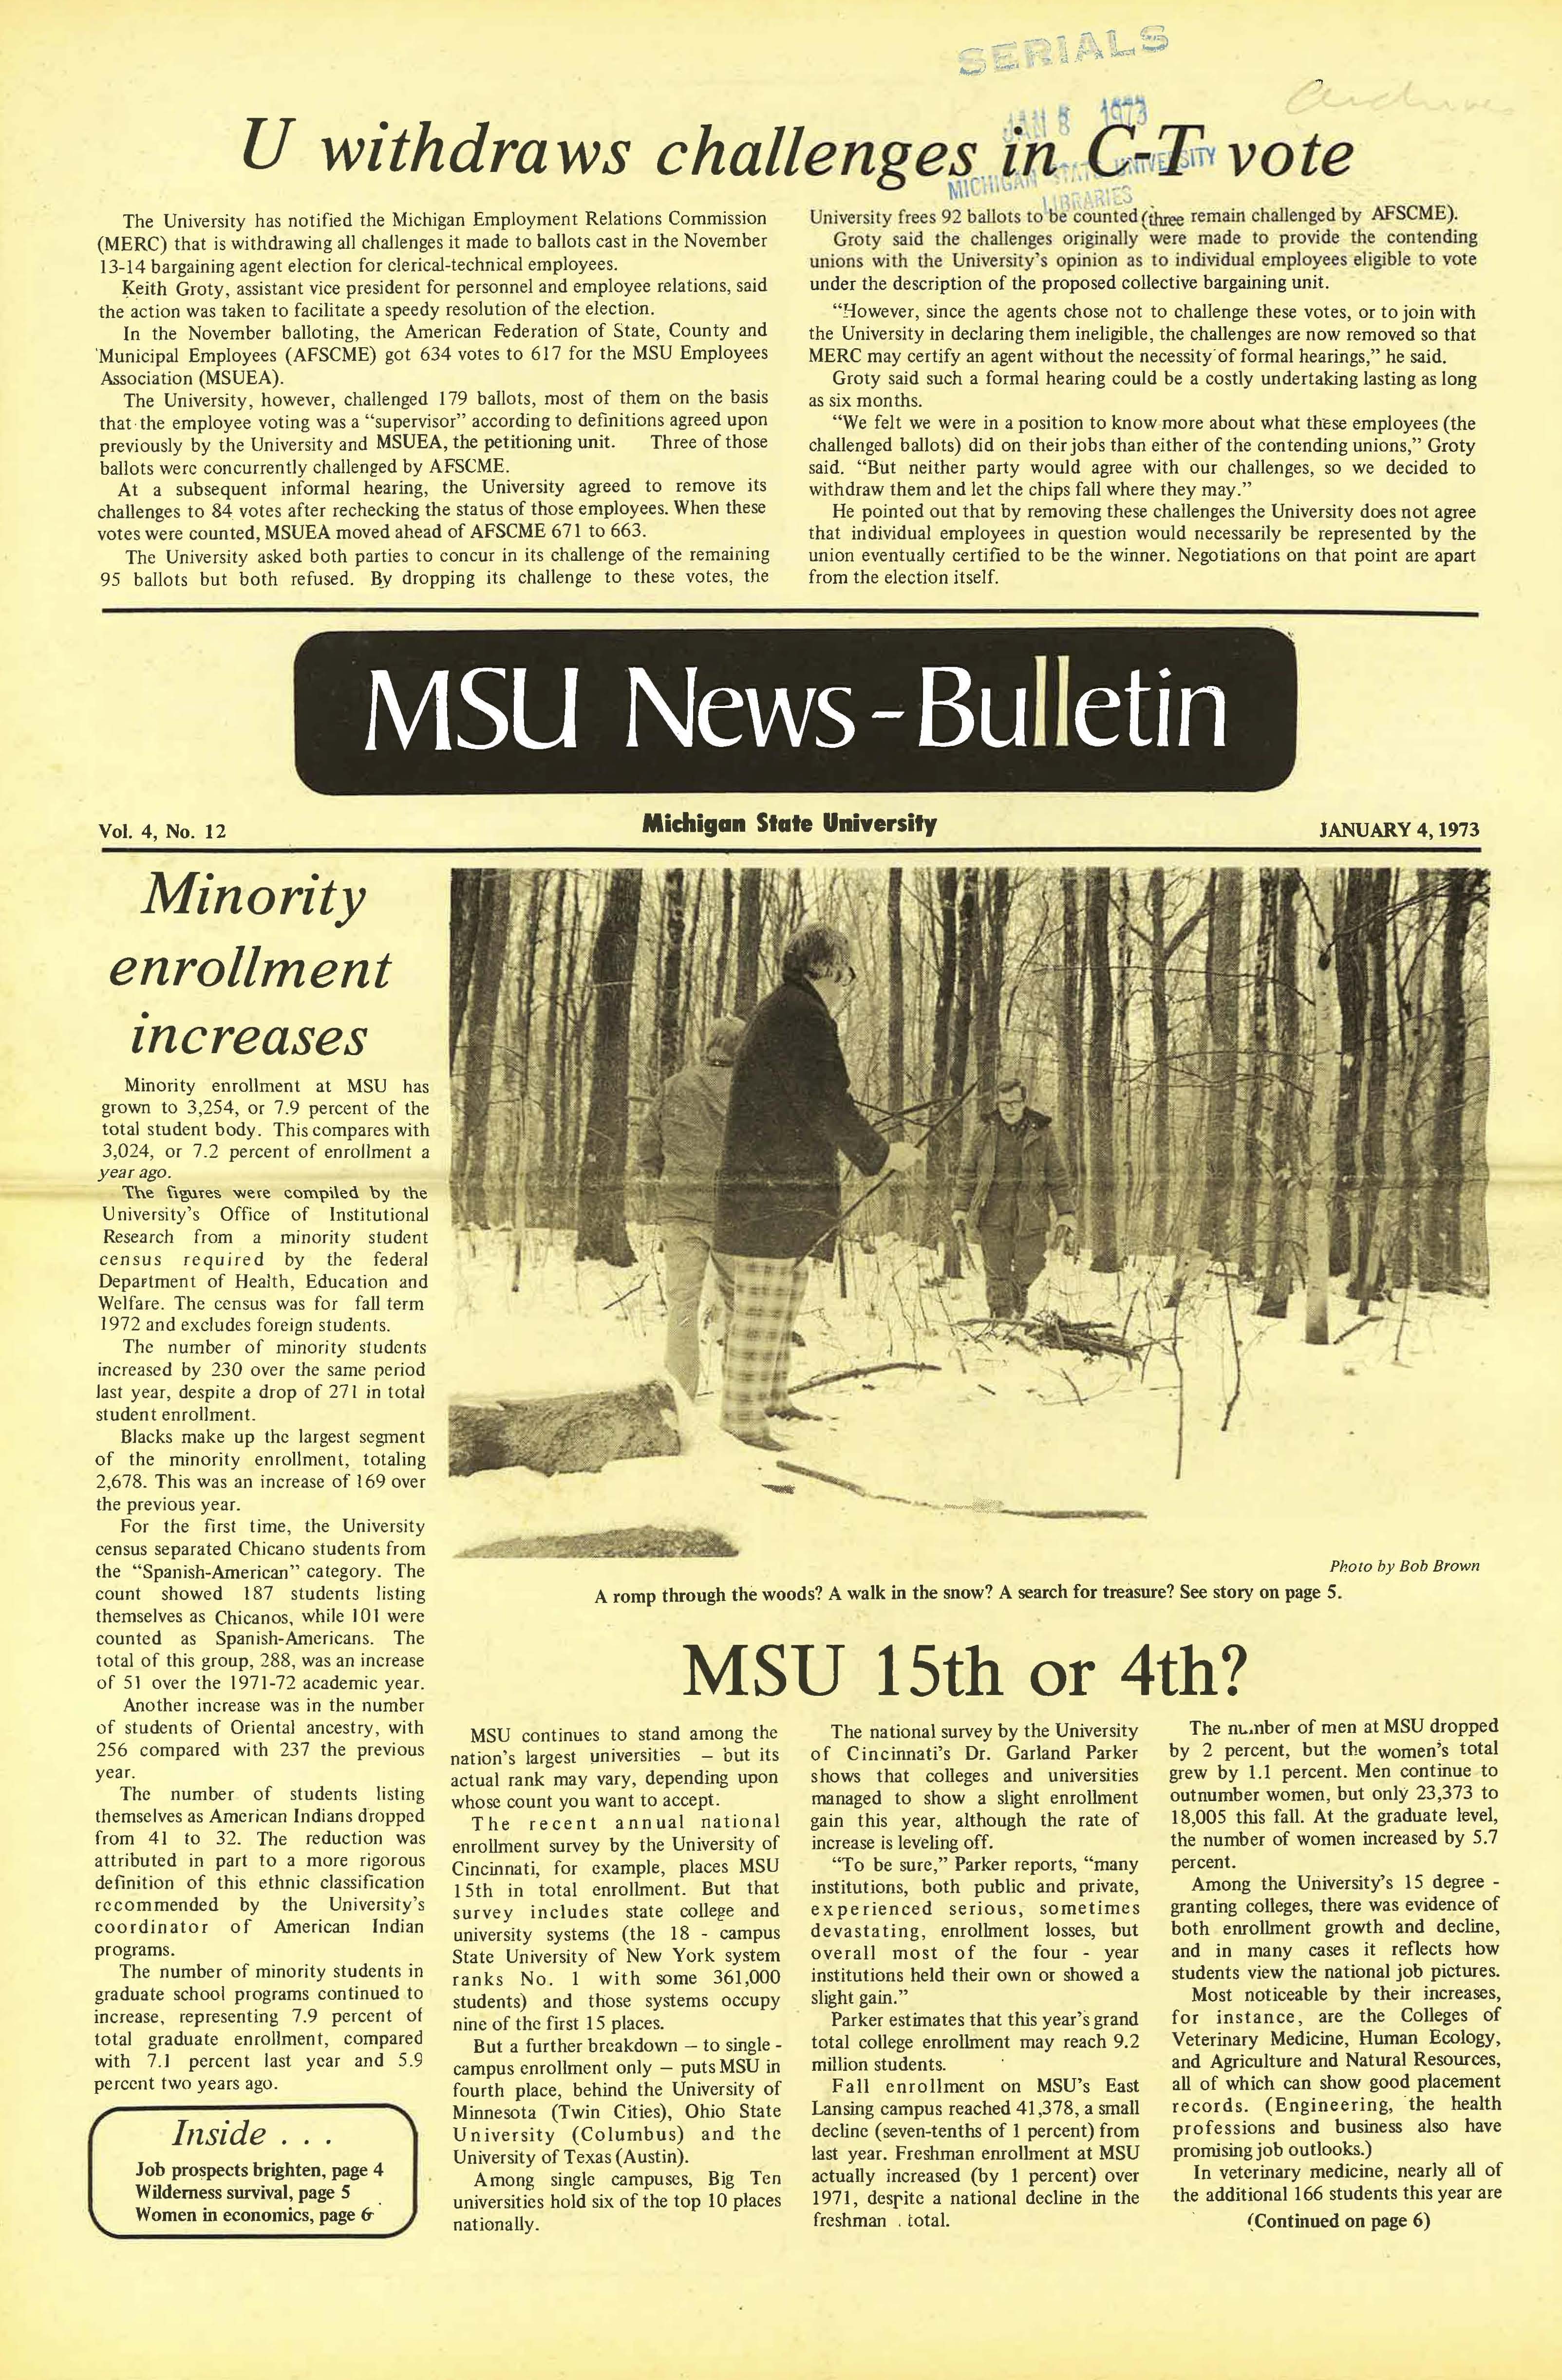 MSU News Bulletin, vol. 4, No. 21, March 8, 1973